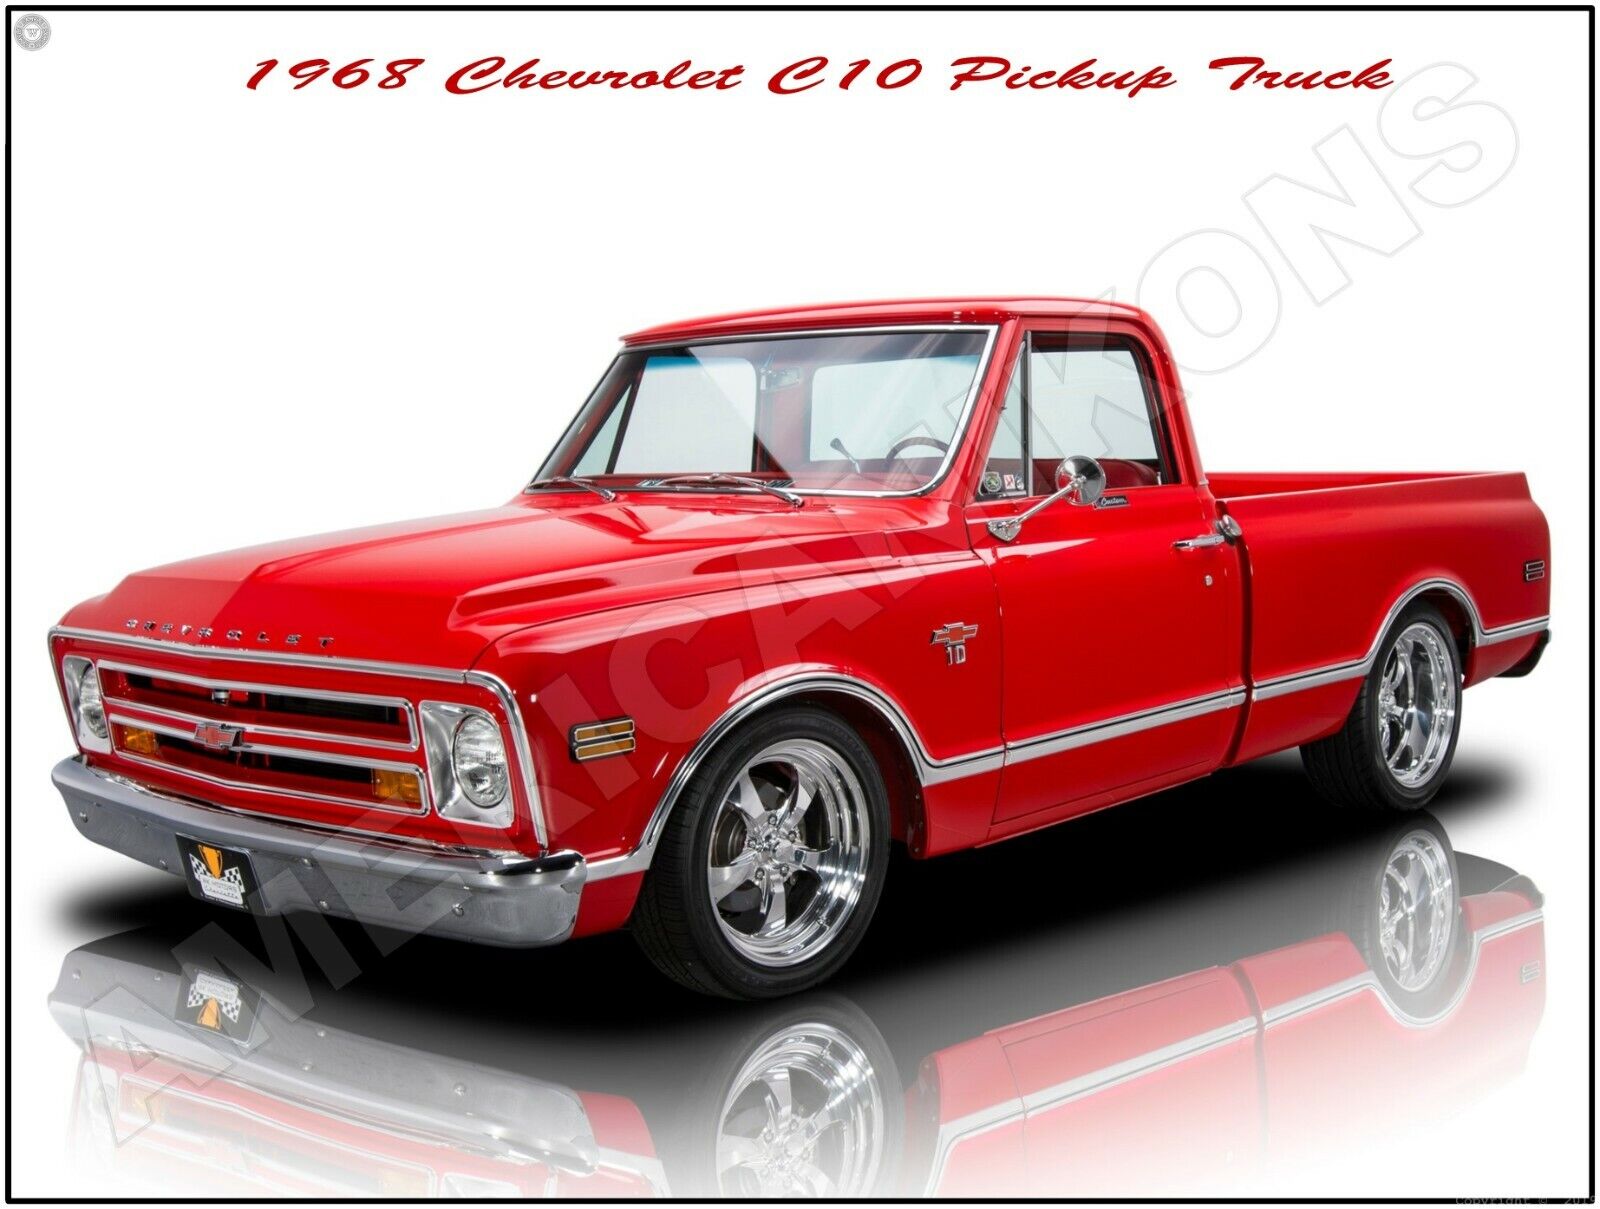 1968 truck chevy